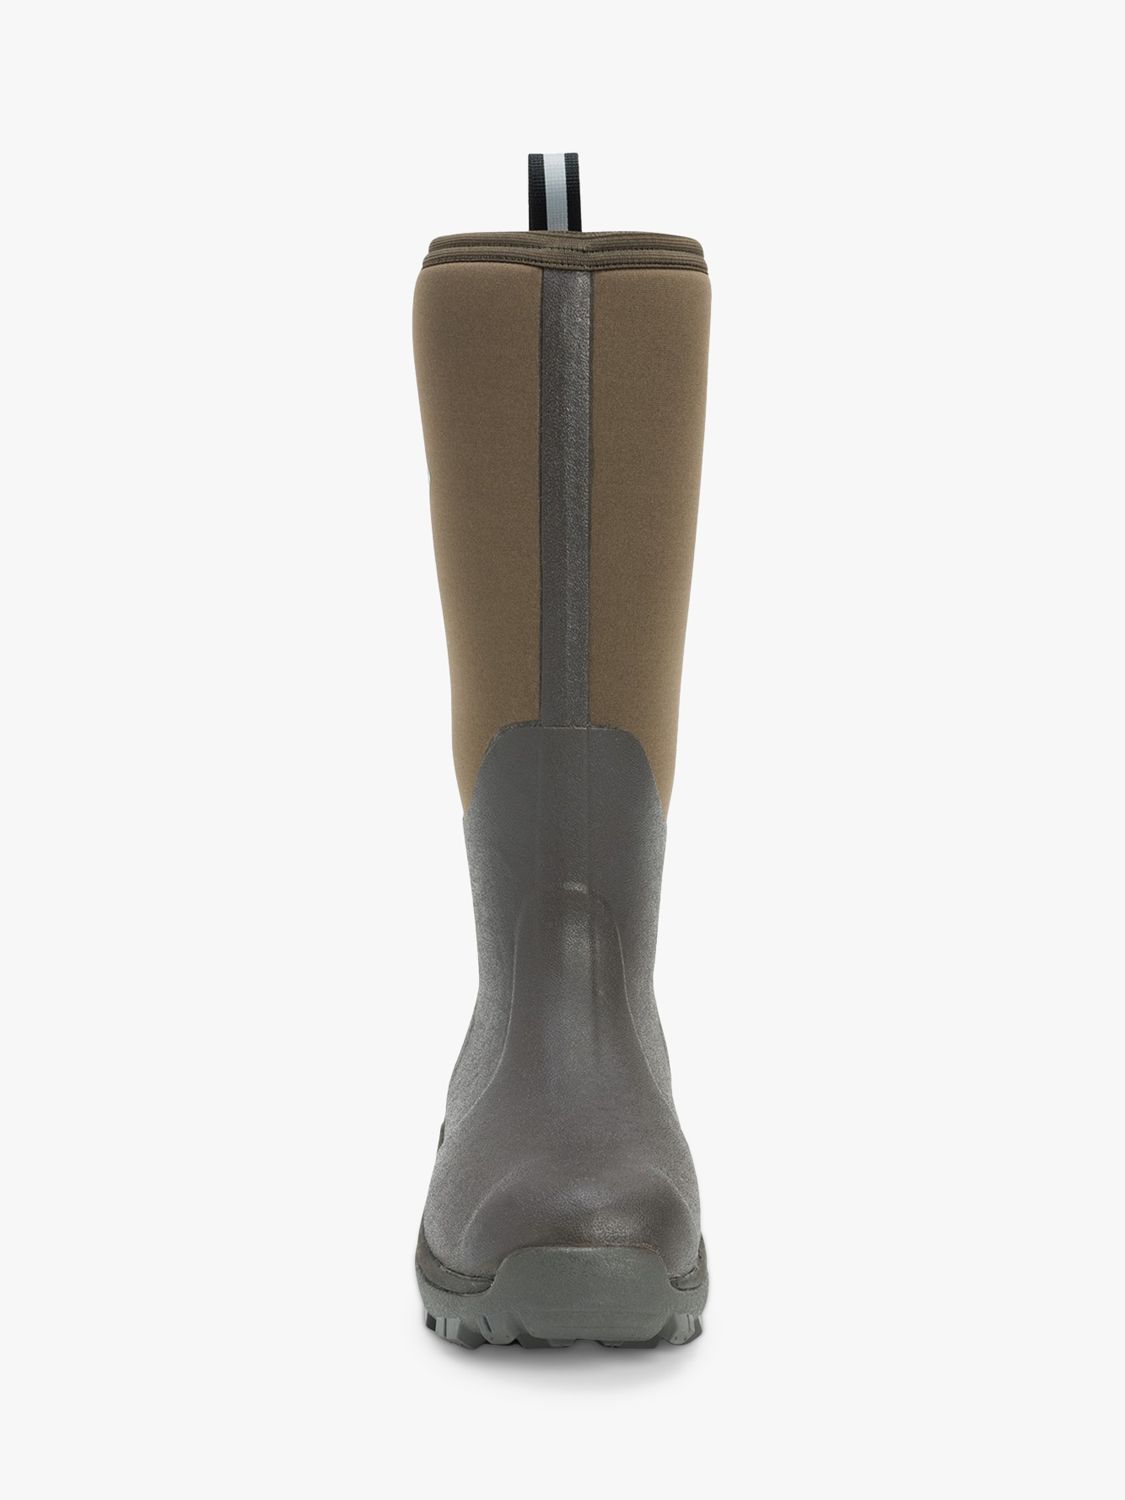 Muck Wetland Tall Wellington Boots, Brown, 4